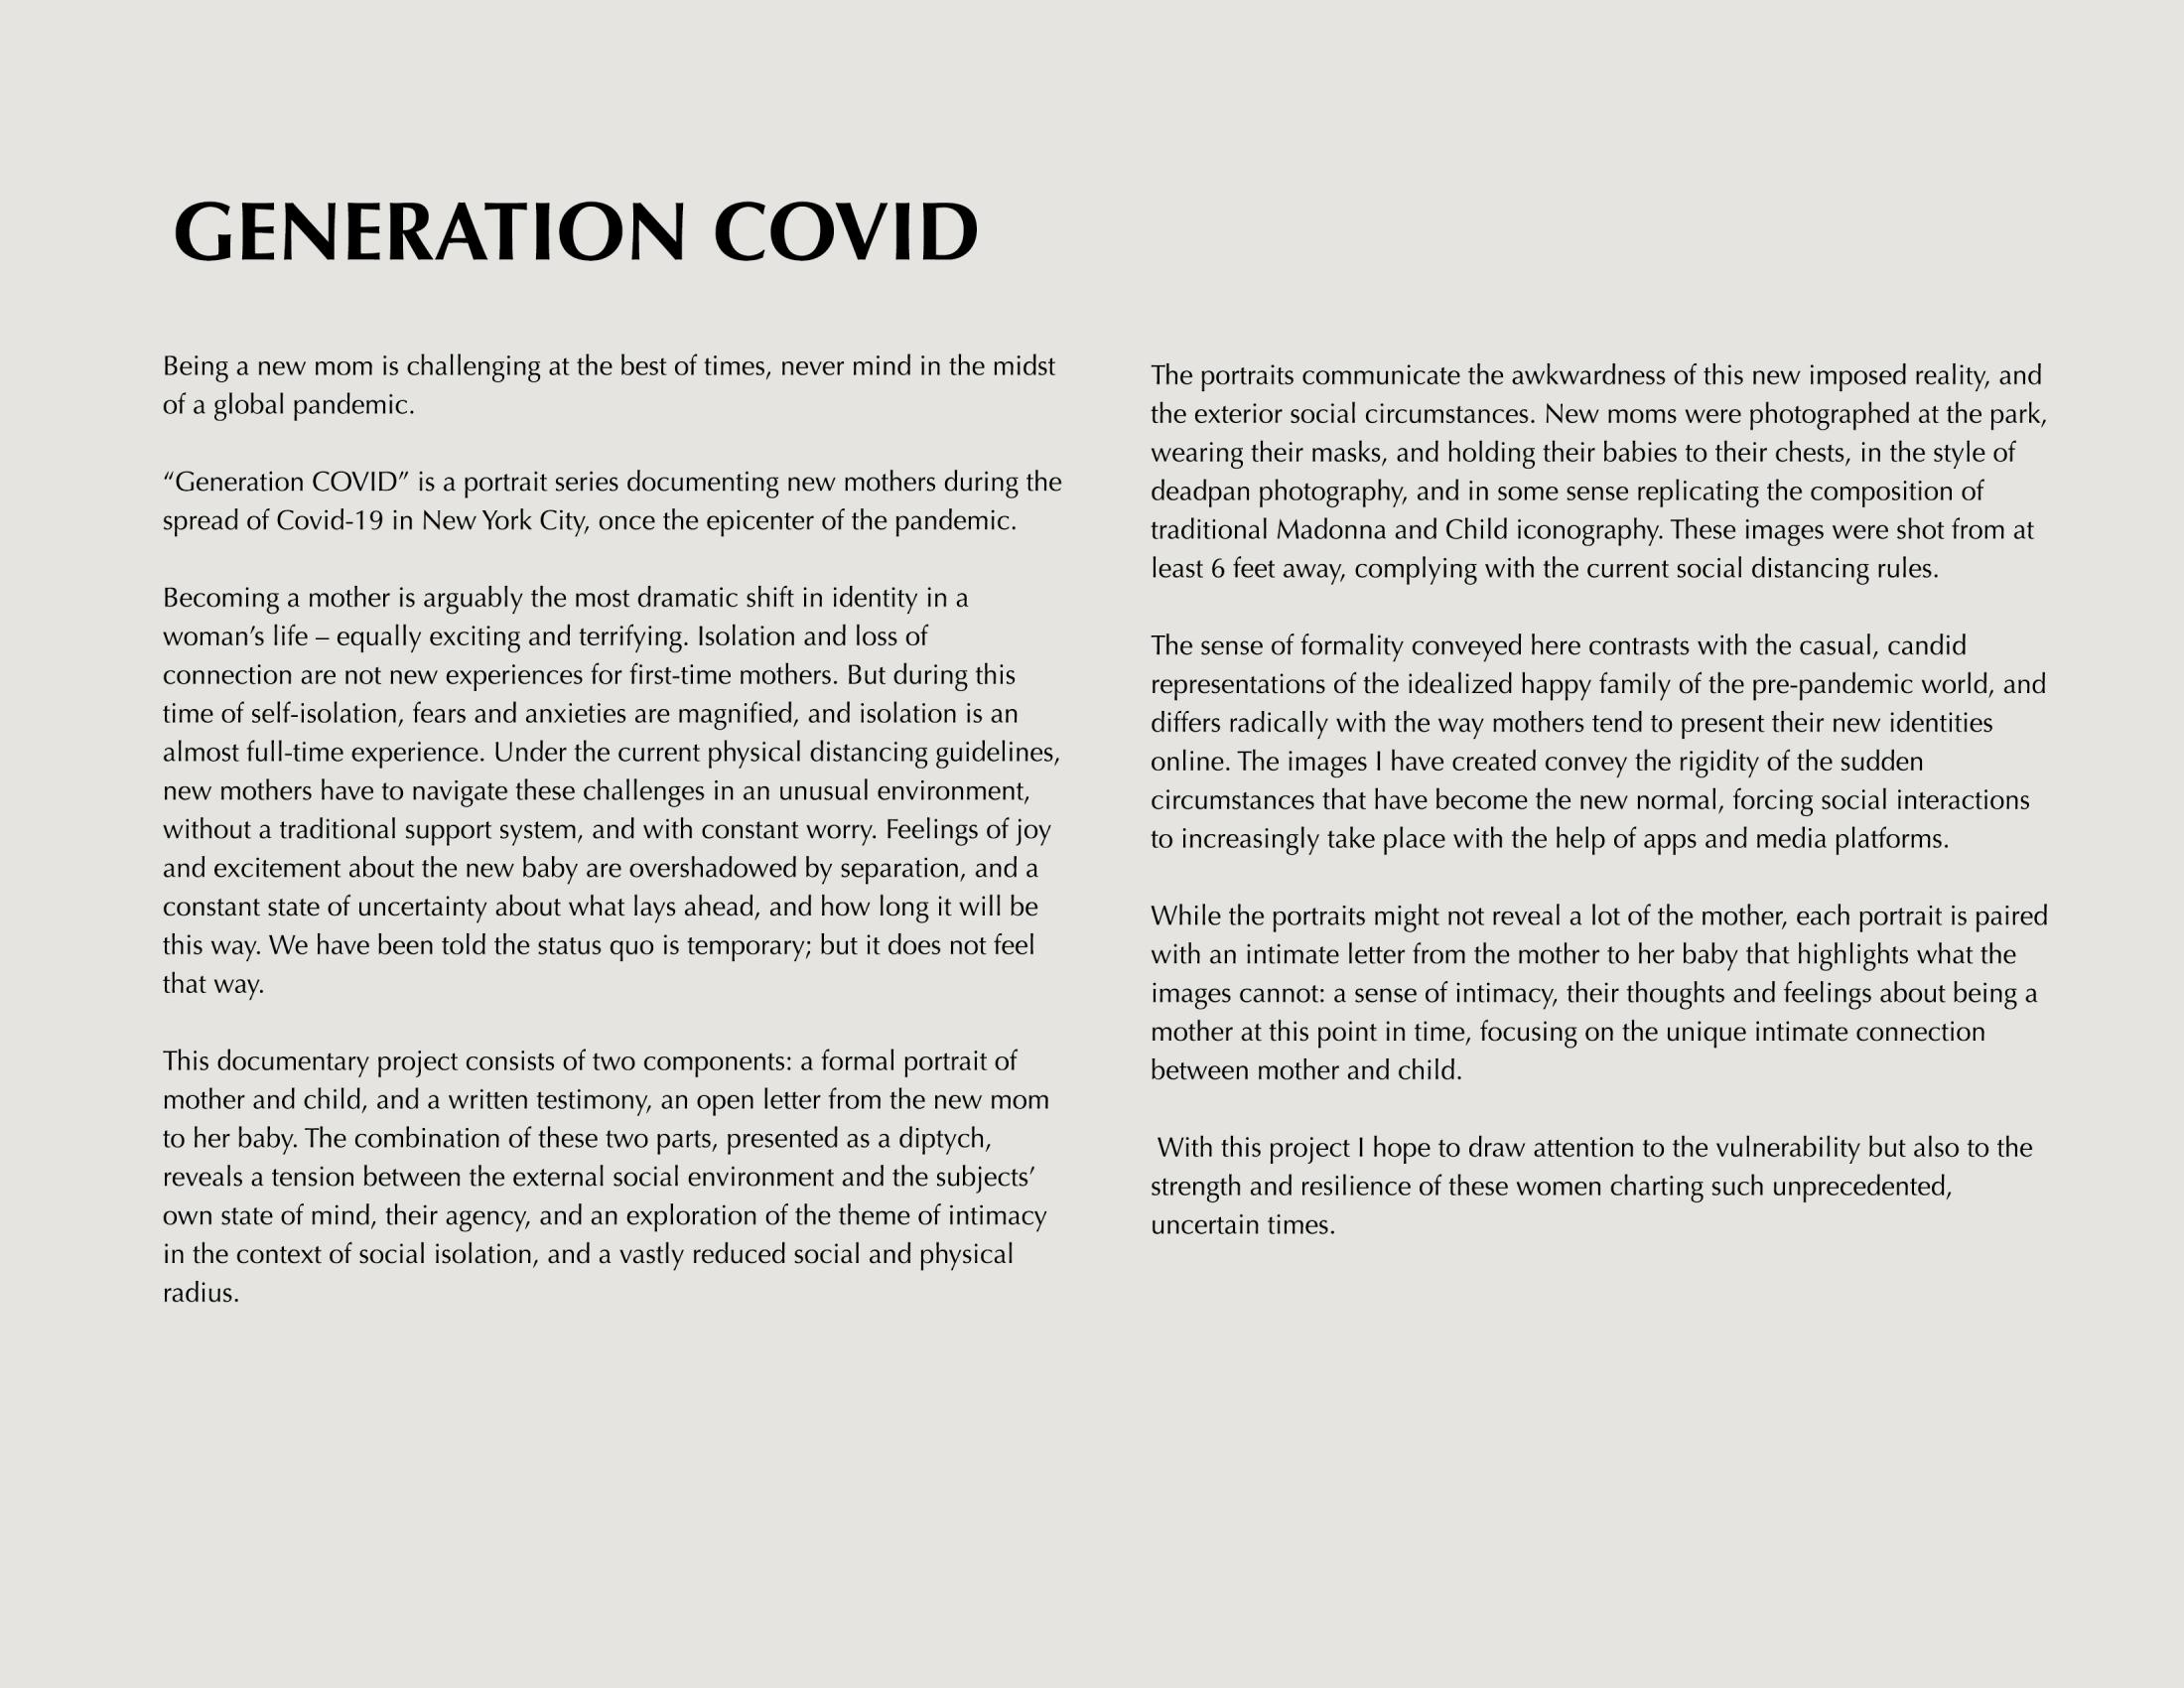 Generation Covid - 